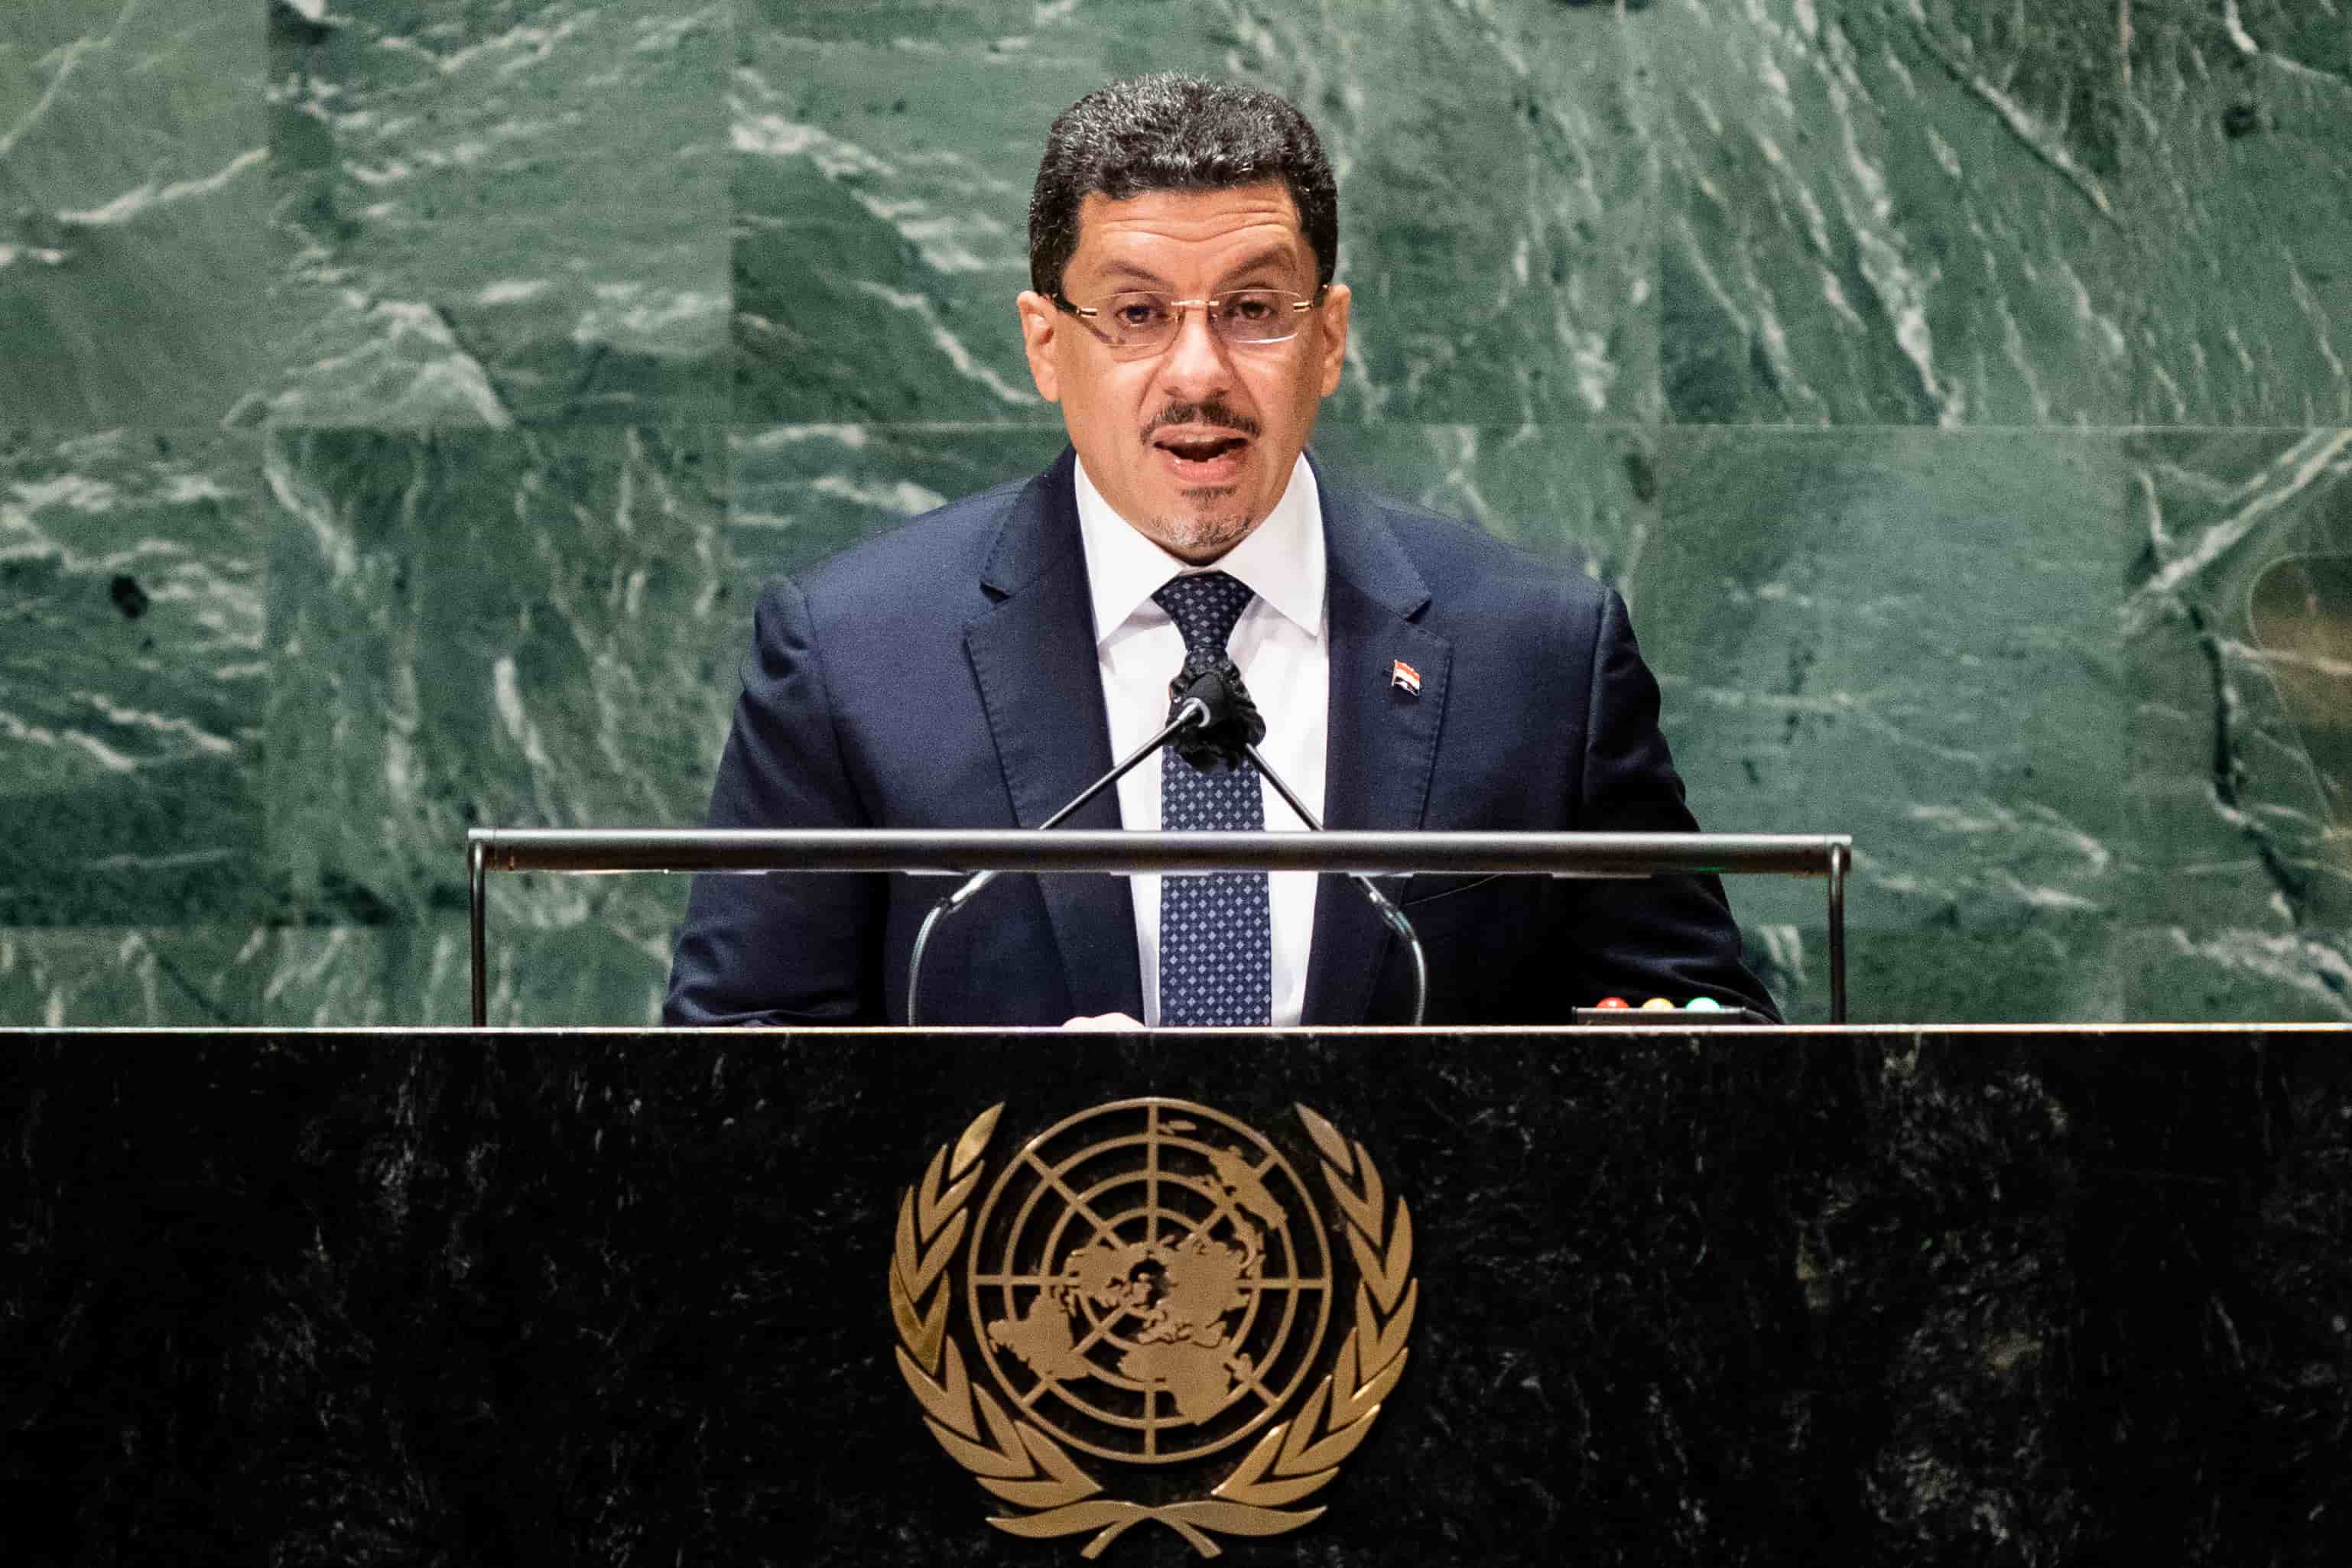 Yemen Appoints Foreign Minister Bin Mubarak as Prime Minister